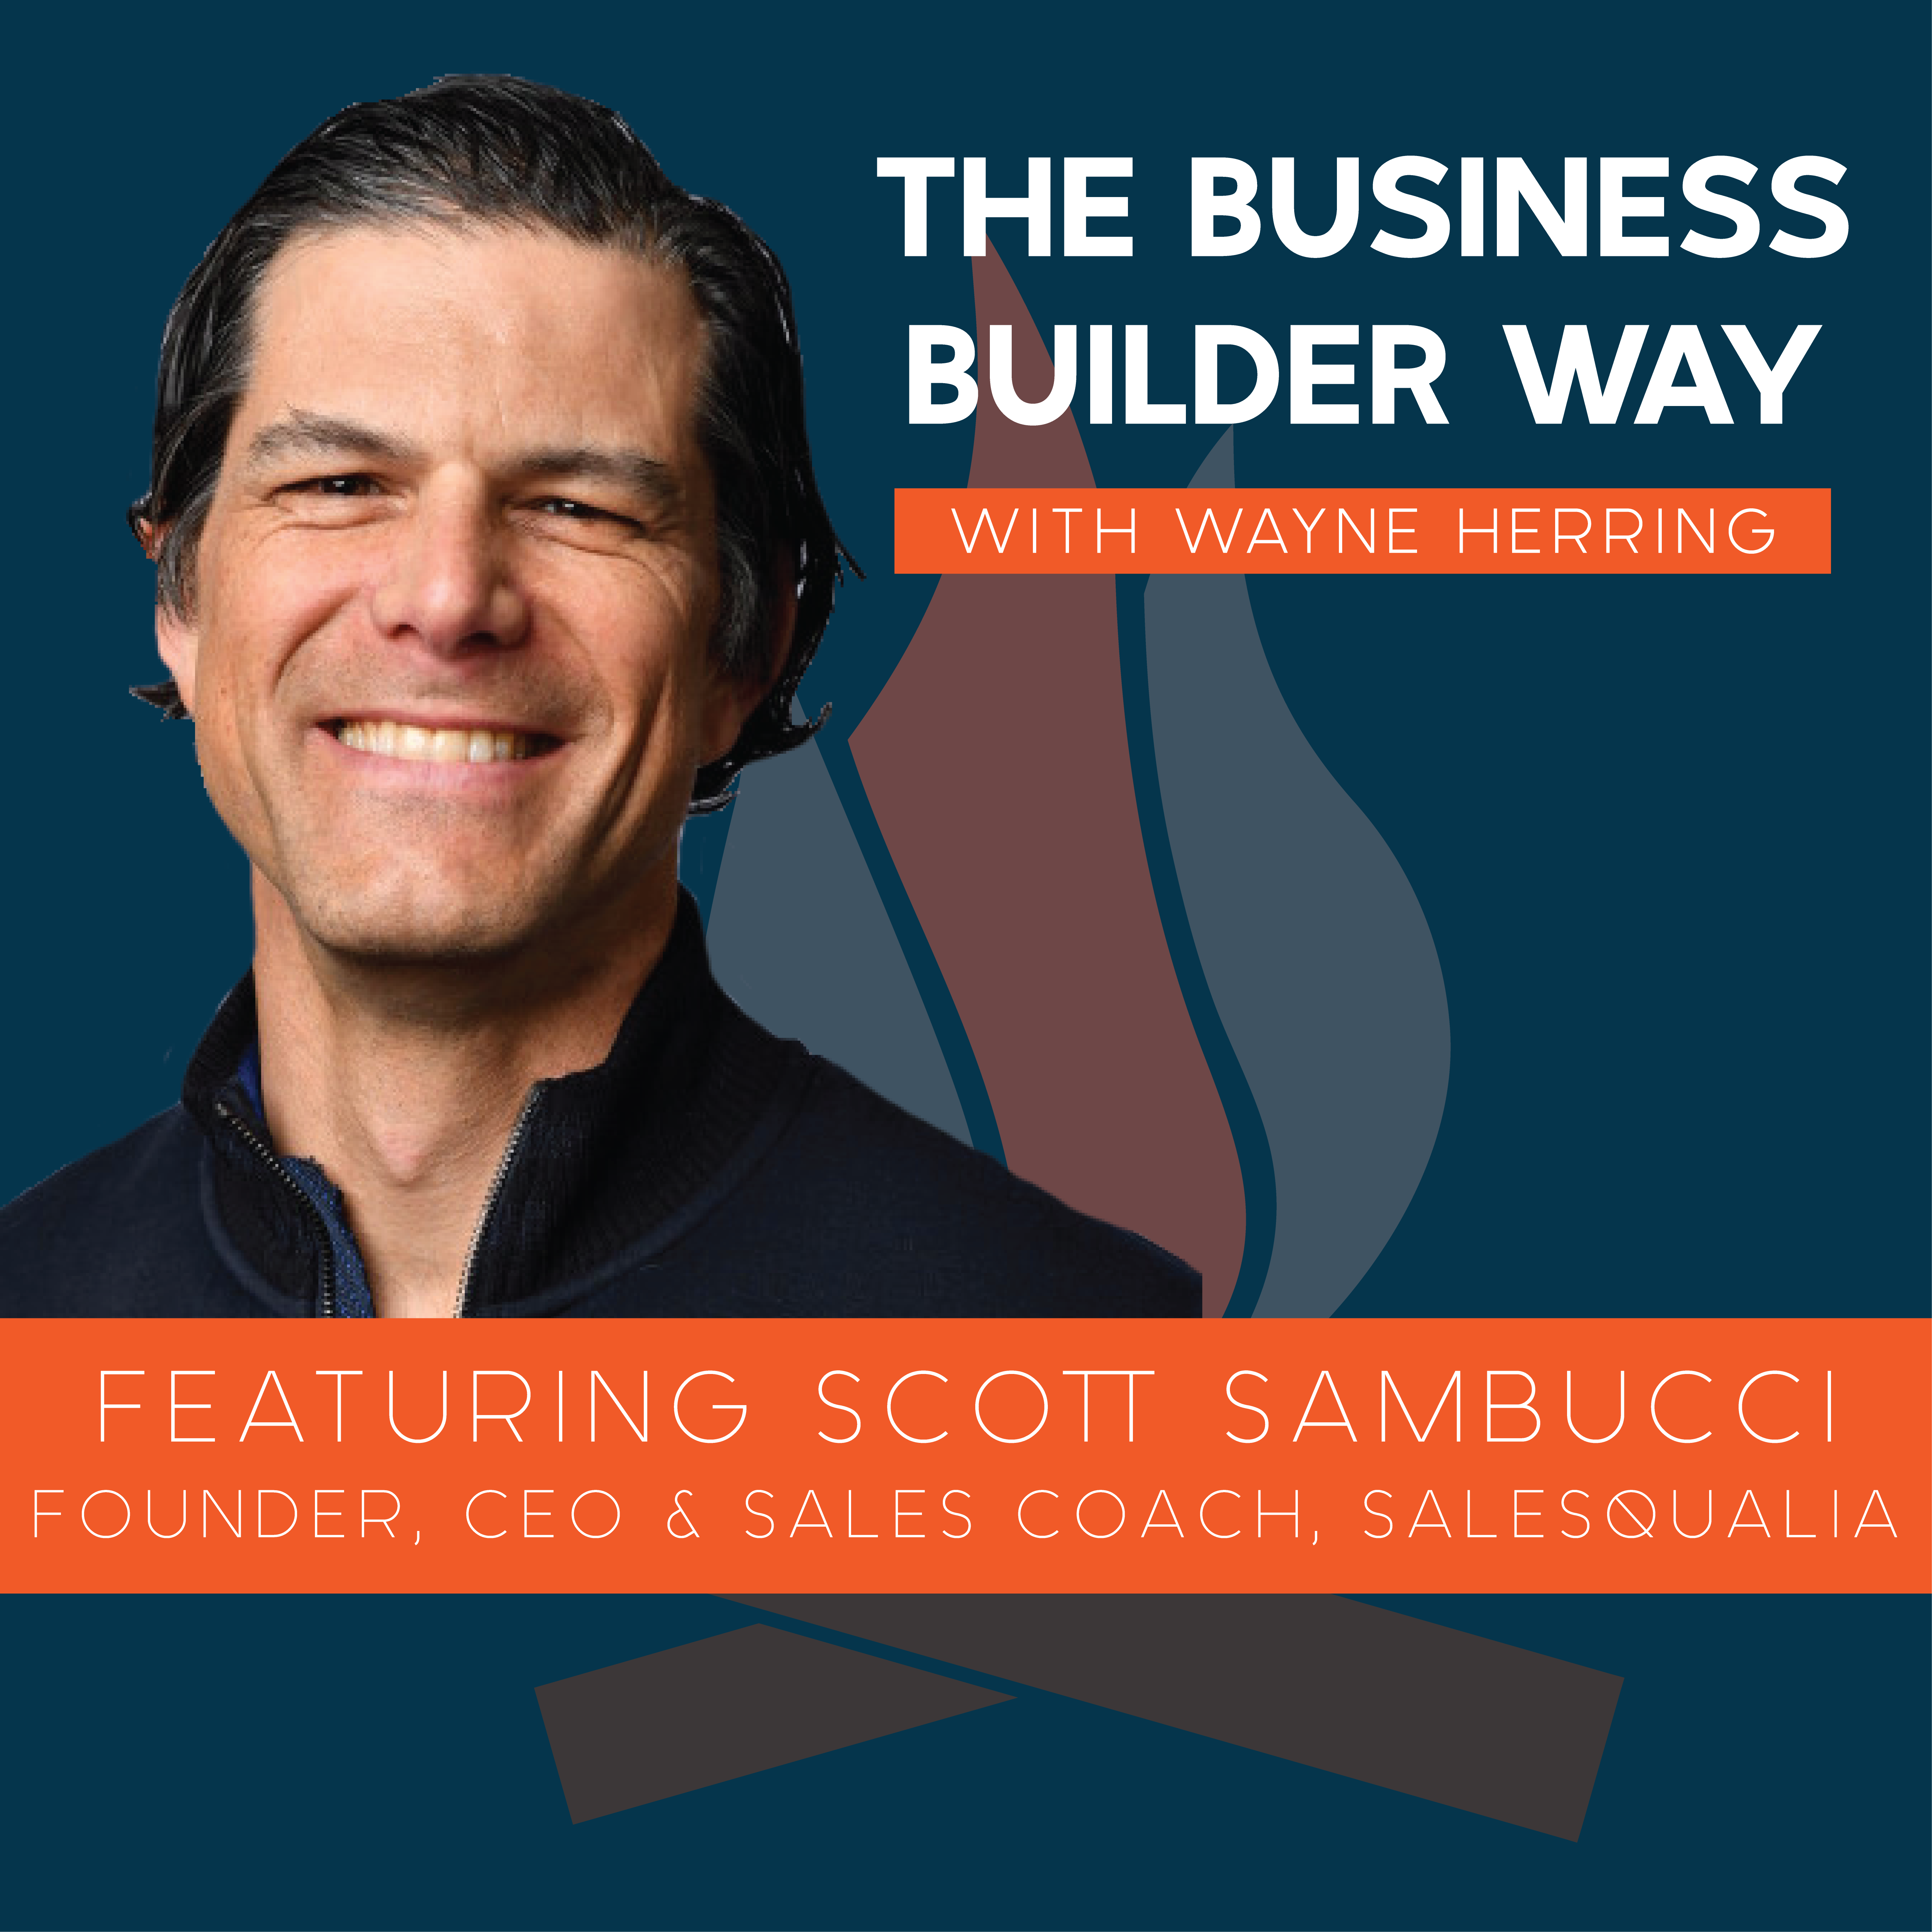 Business Builder Way Podcast image featuring Scott Sambucci founder of Salesqualia.